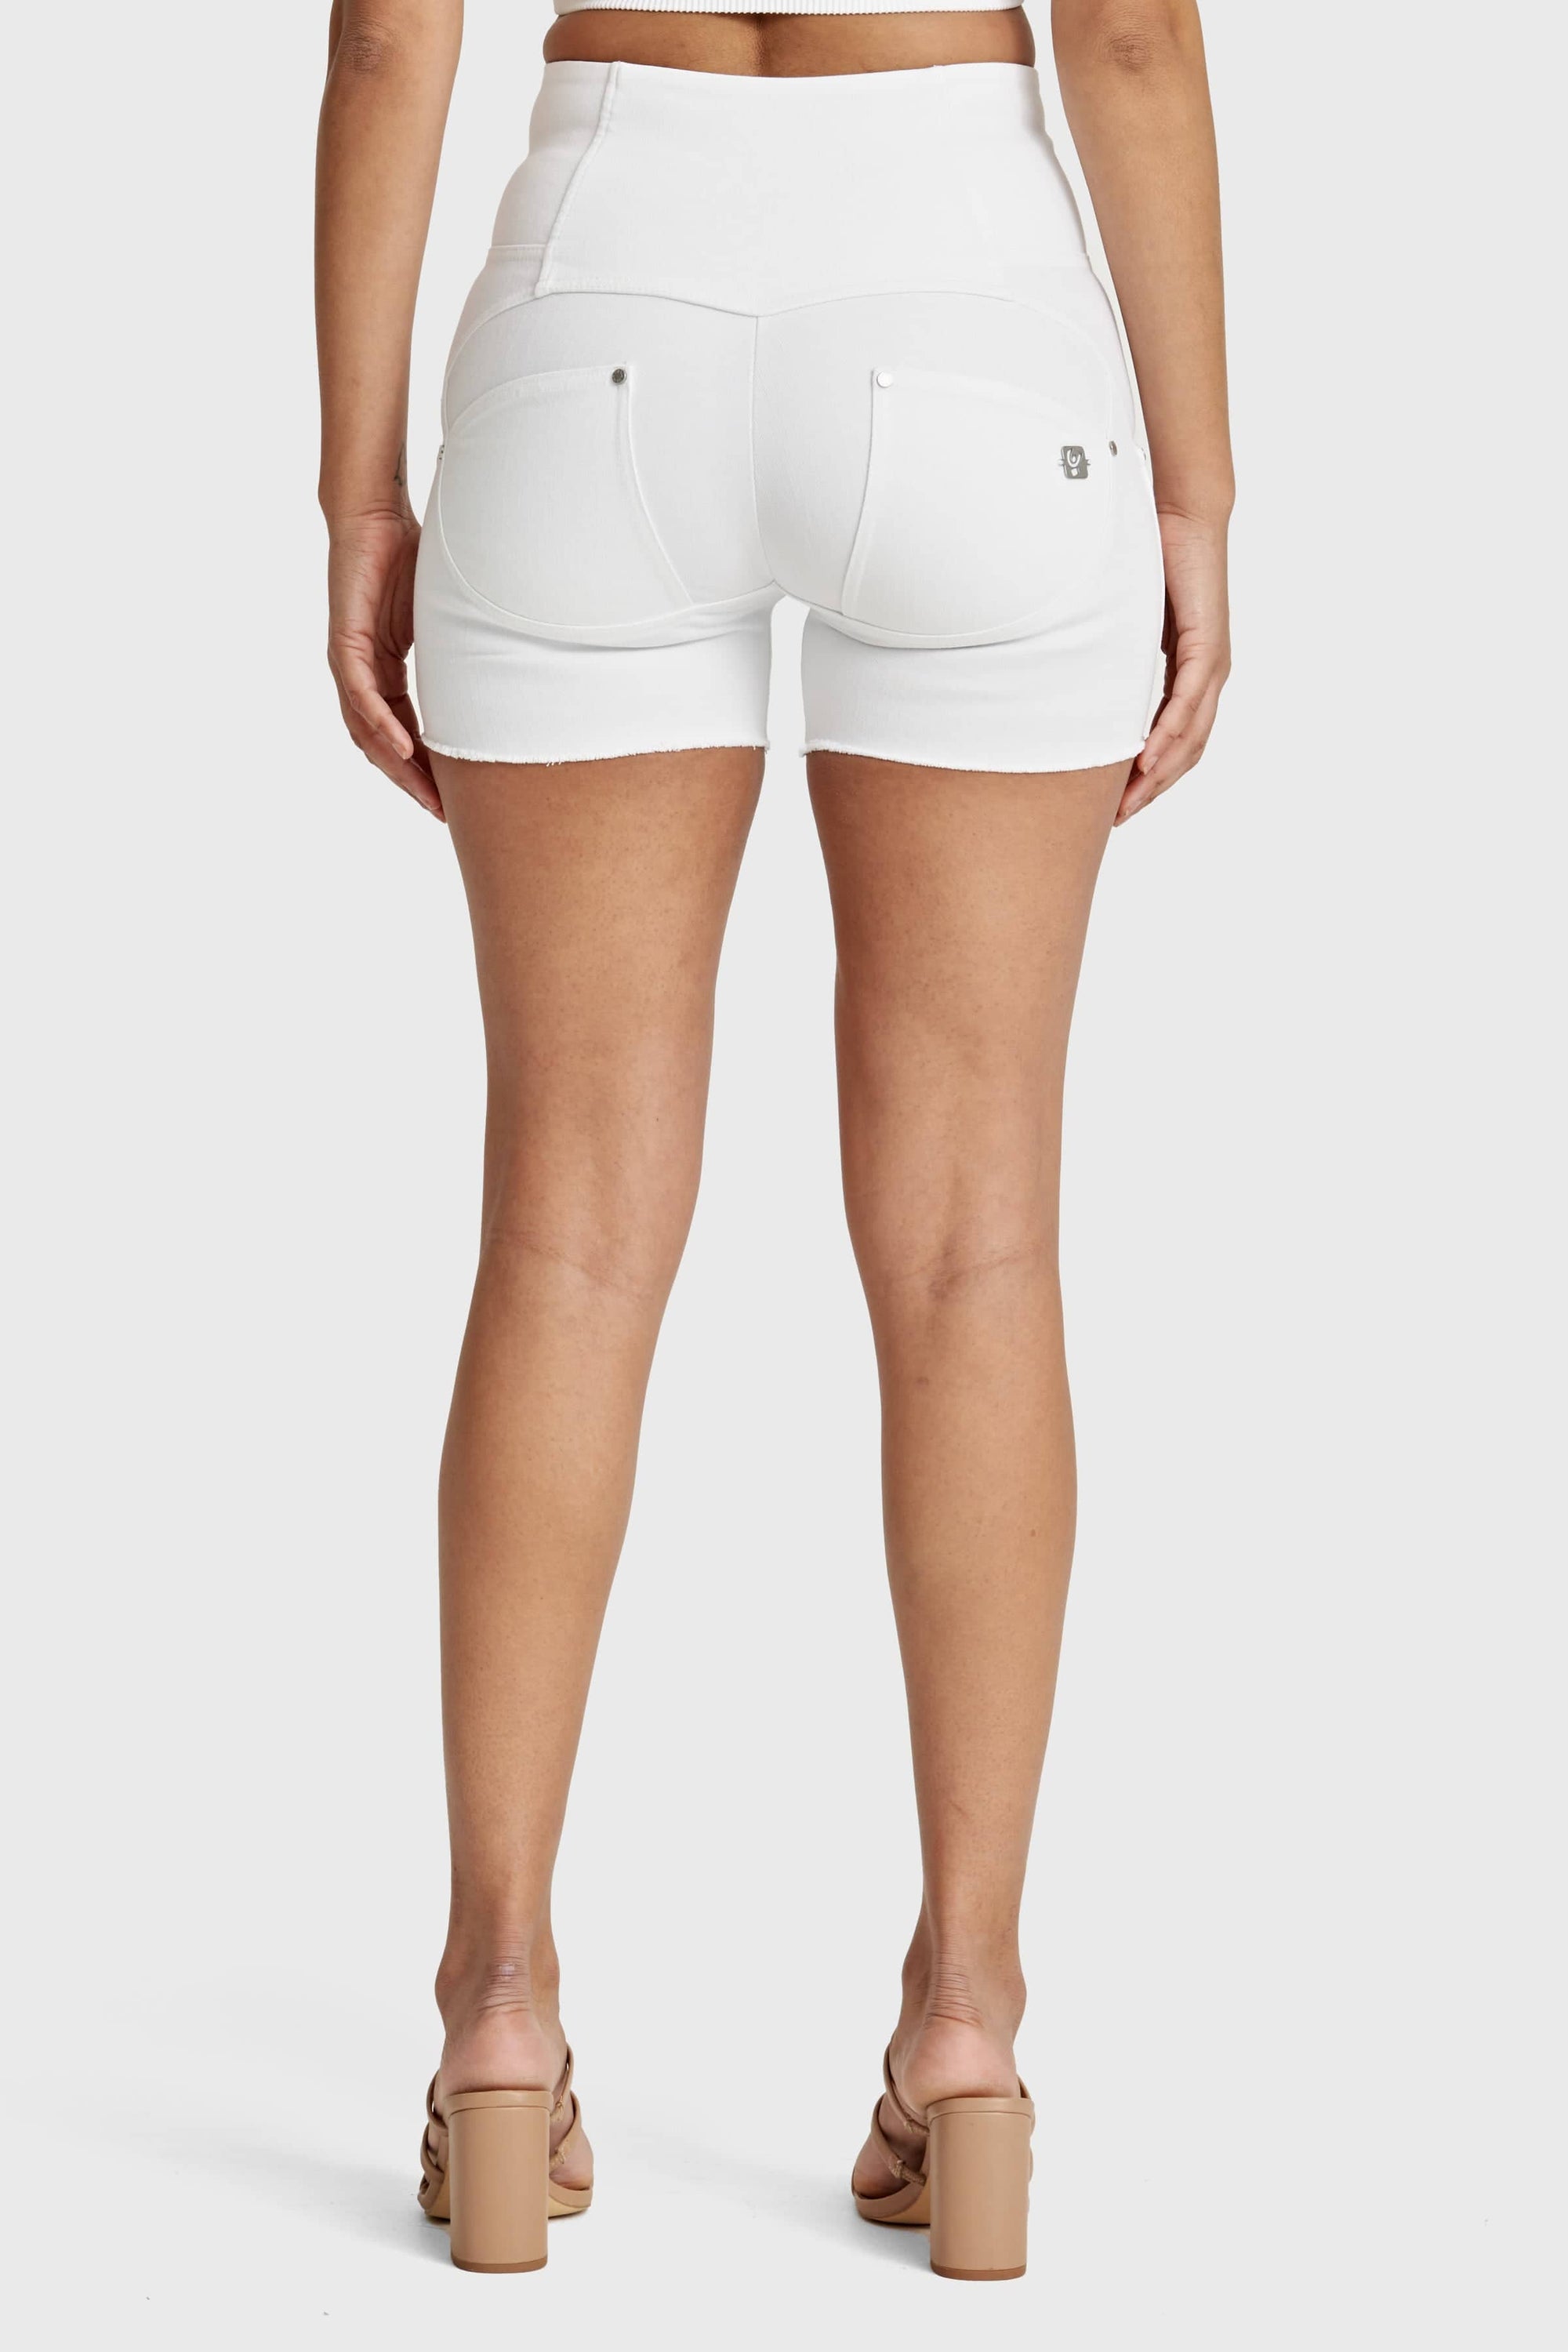 WR.UP® Snug Jeans - Cintura alta - Pantalones cortos - Blanco  6